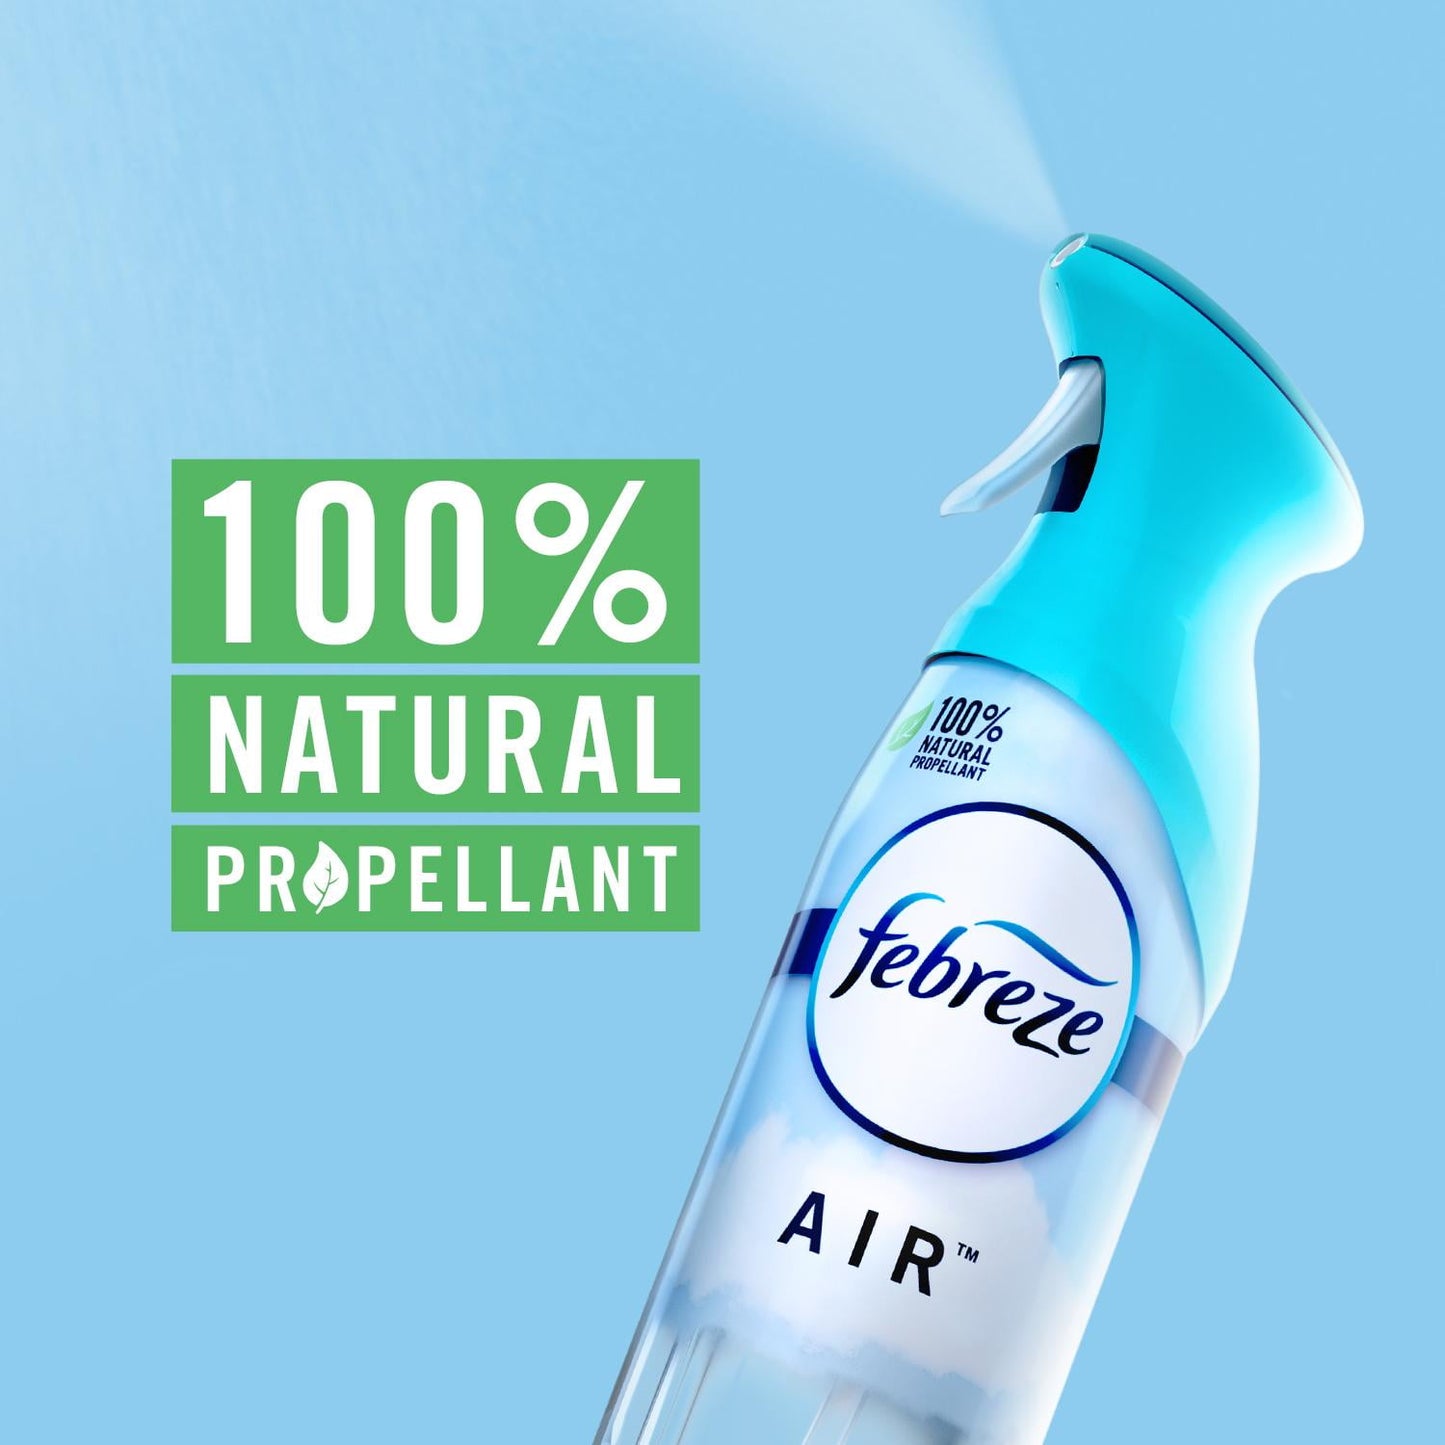 Febreze Odor-Fighting Air Freshener with Gain Honey Berry Hula Scent, 8.8 fl oz